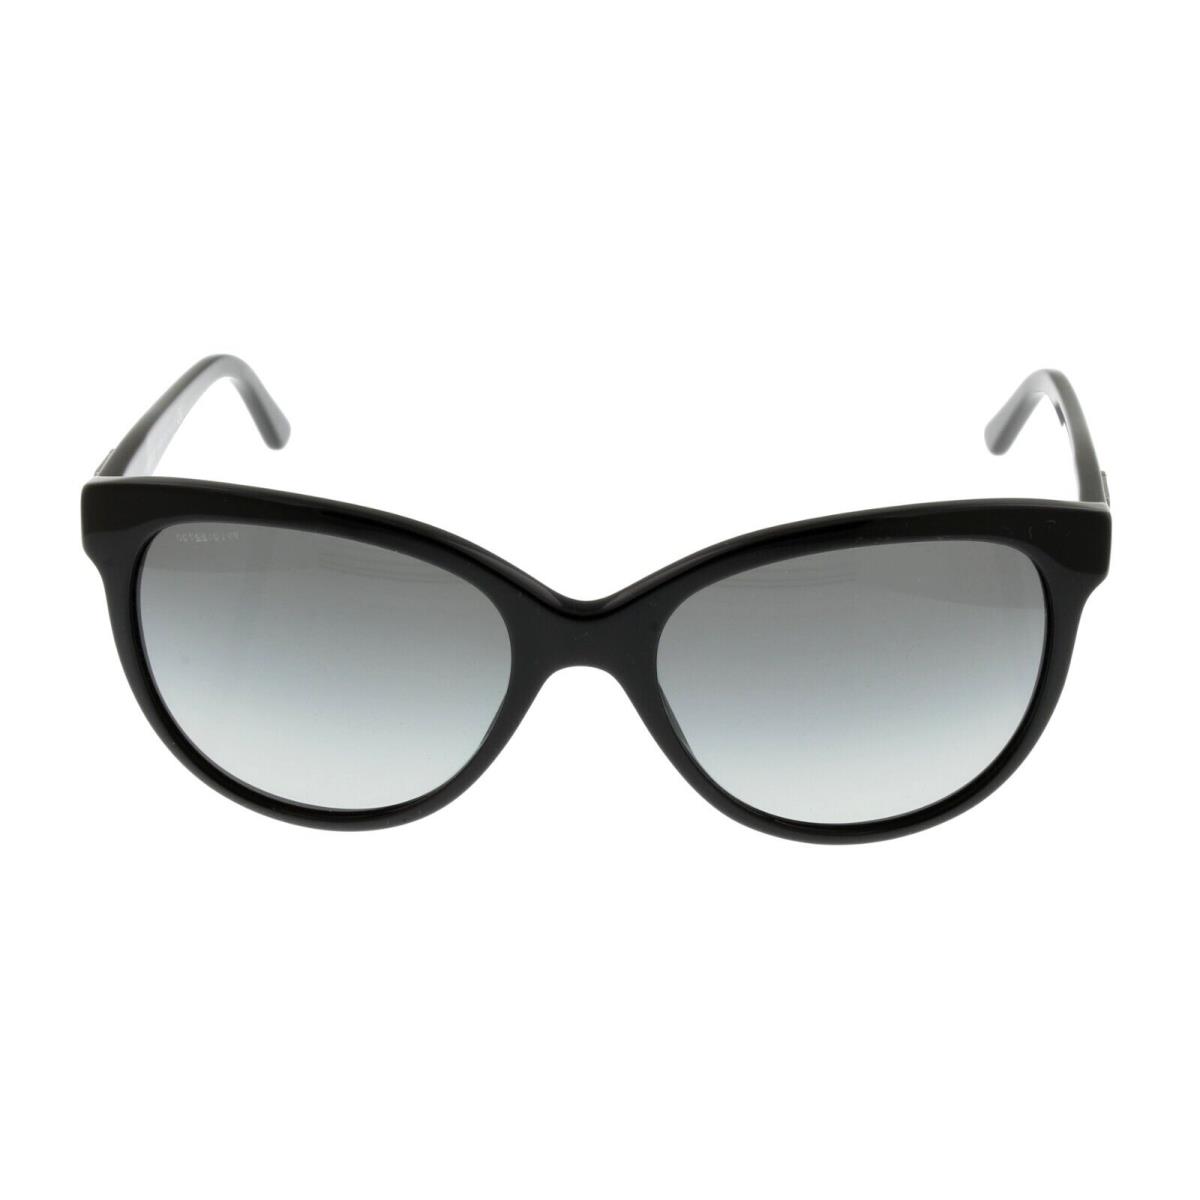 Versace Sunglasses Women Black VE4246B GB1 11 Oval Fashion